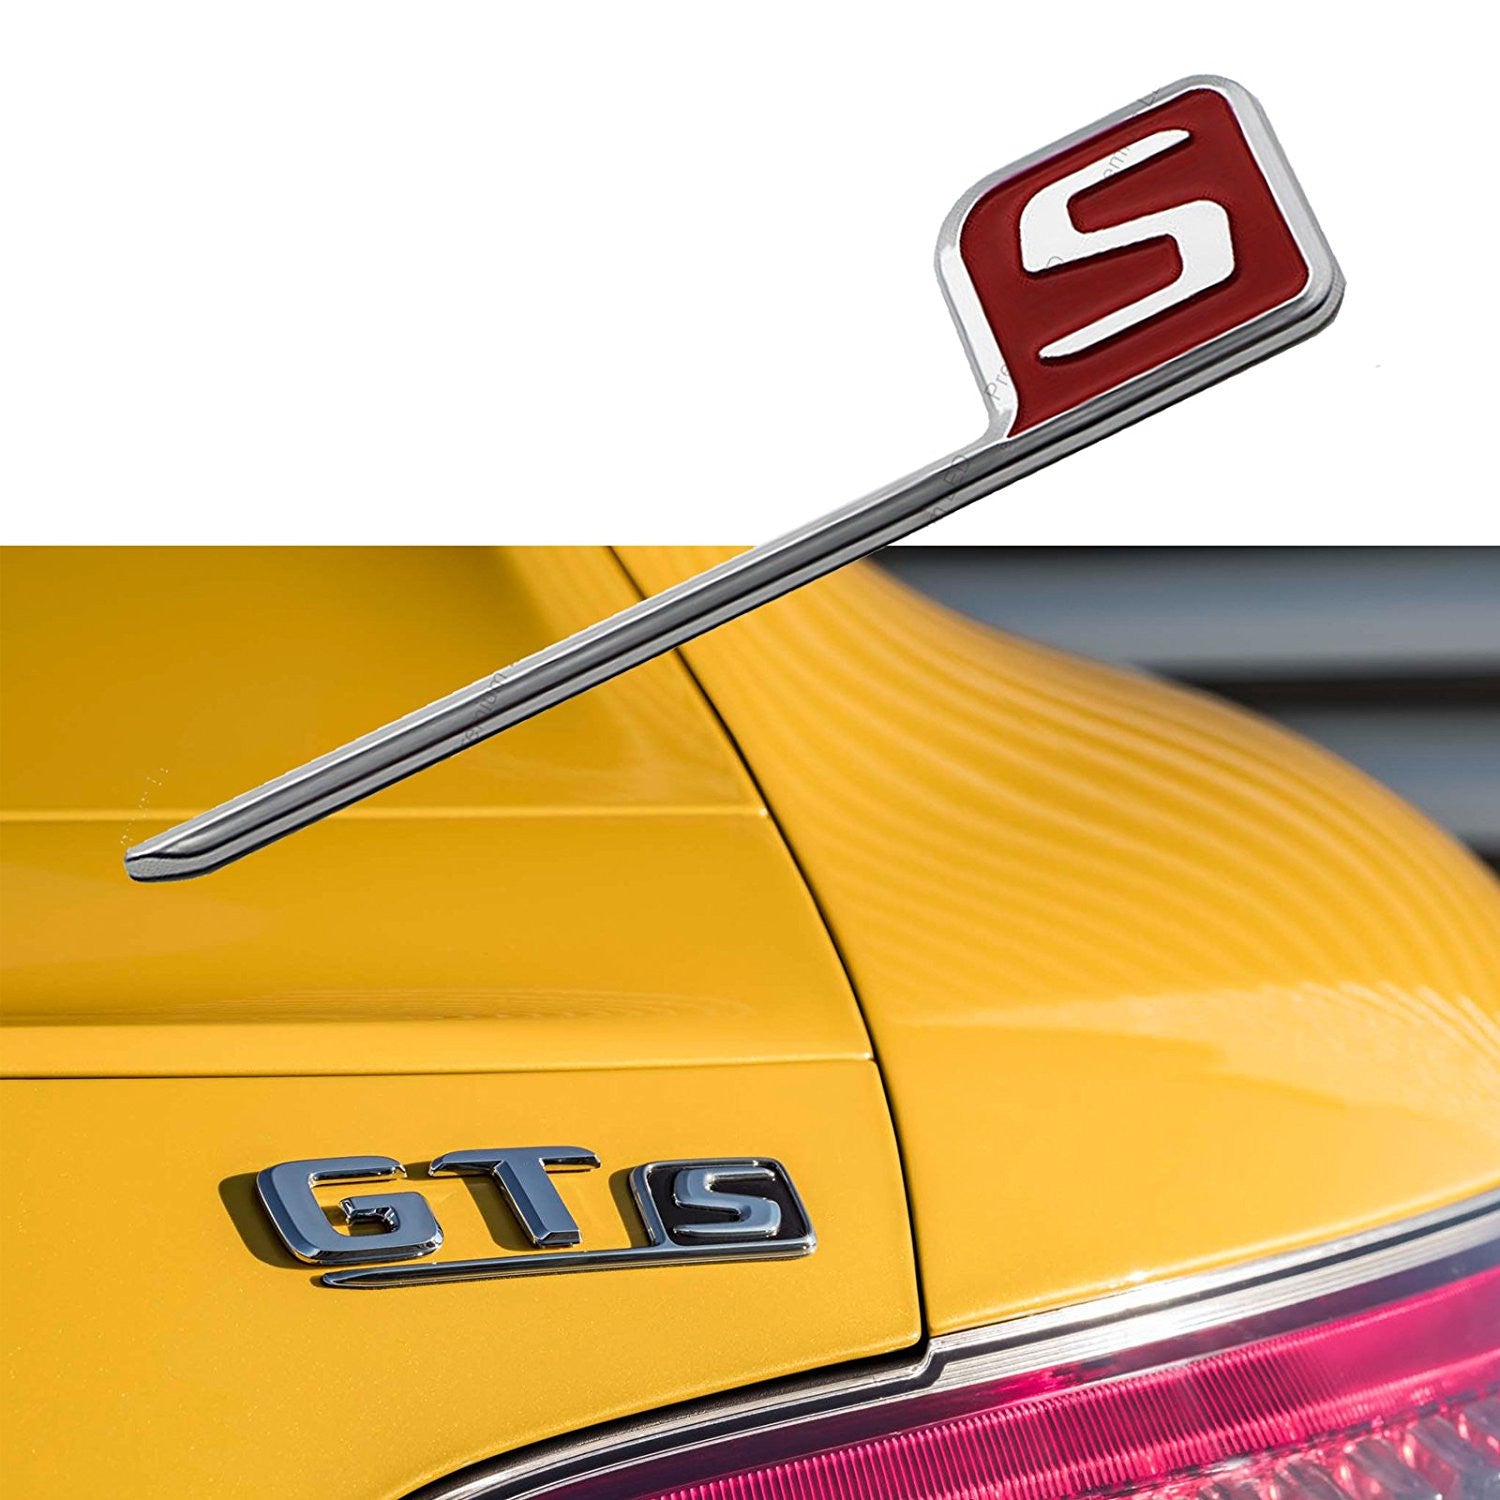 1x 3D Chrome S Logo Car Rear Trunk Lid Emblem Sticker For Mercedes Ben